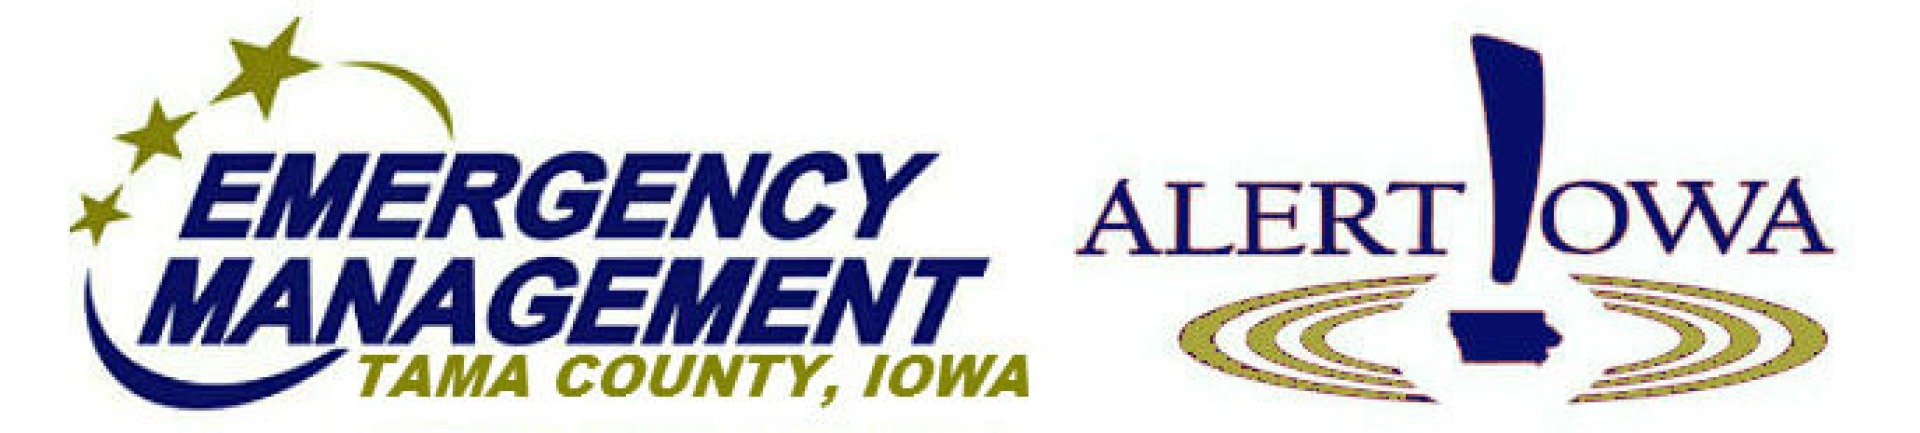 Tama County Emergency Management and Alert Iowa logo that links to Alert Iowa's website.